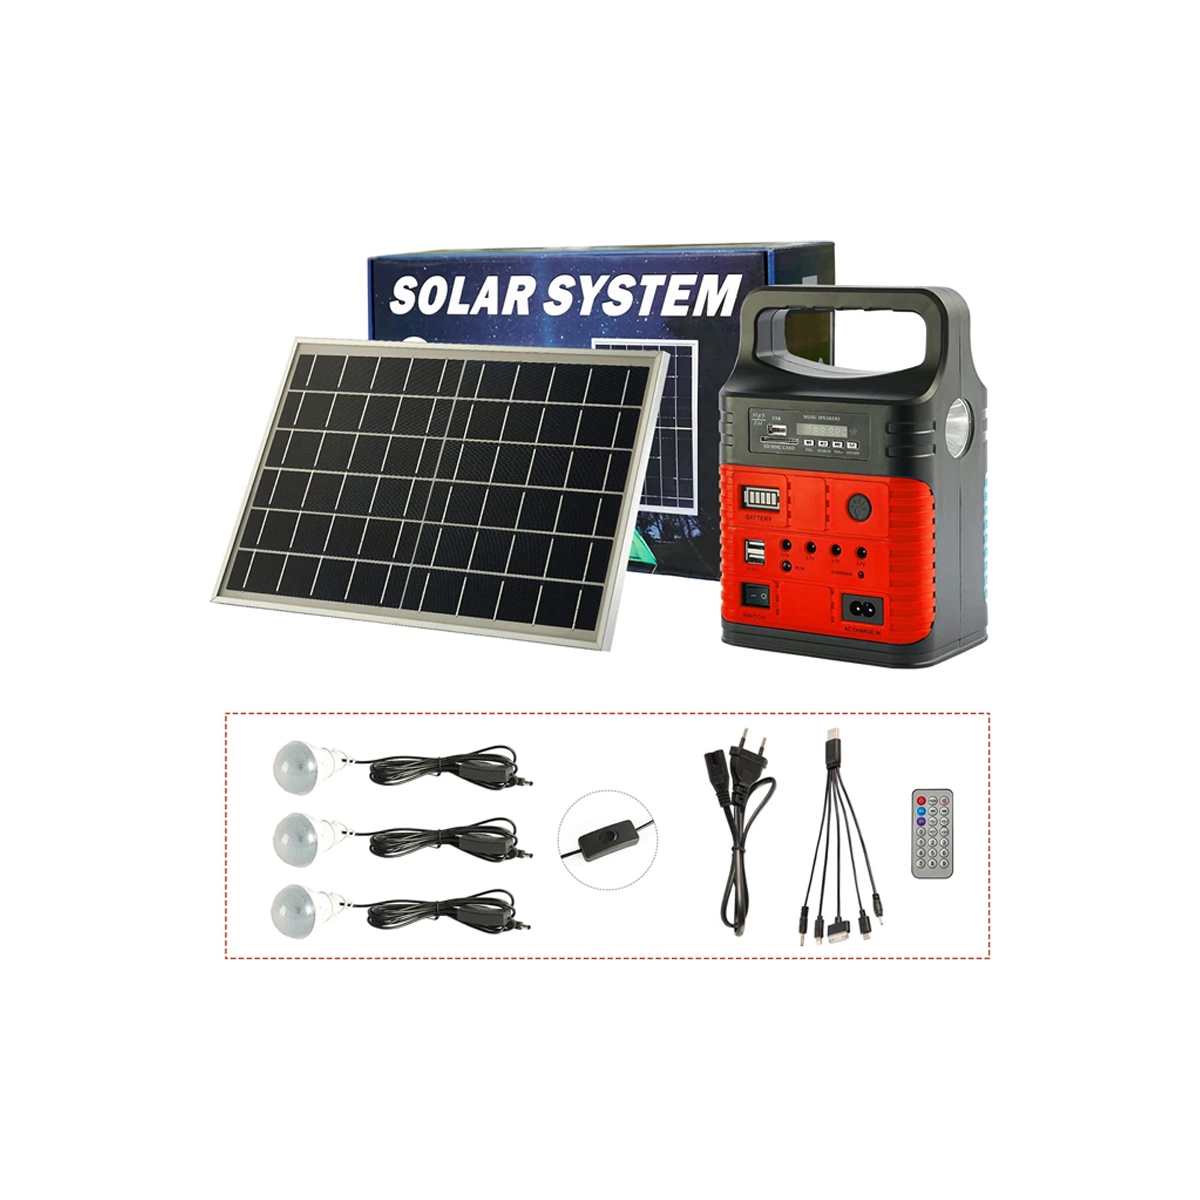 Portable Emergency Power Backup Kits Camping Light Solar Kits Generator Home Lighting Solar Energy Kit Solar Table Lamp for Study